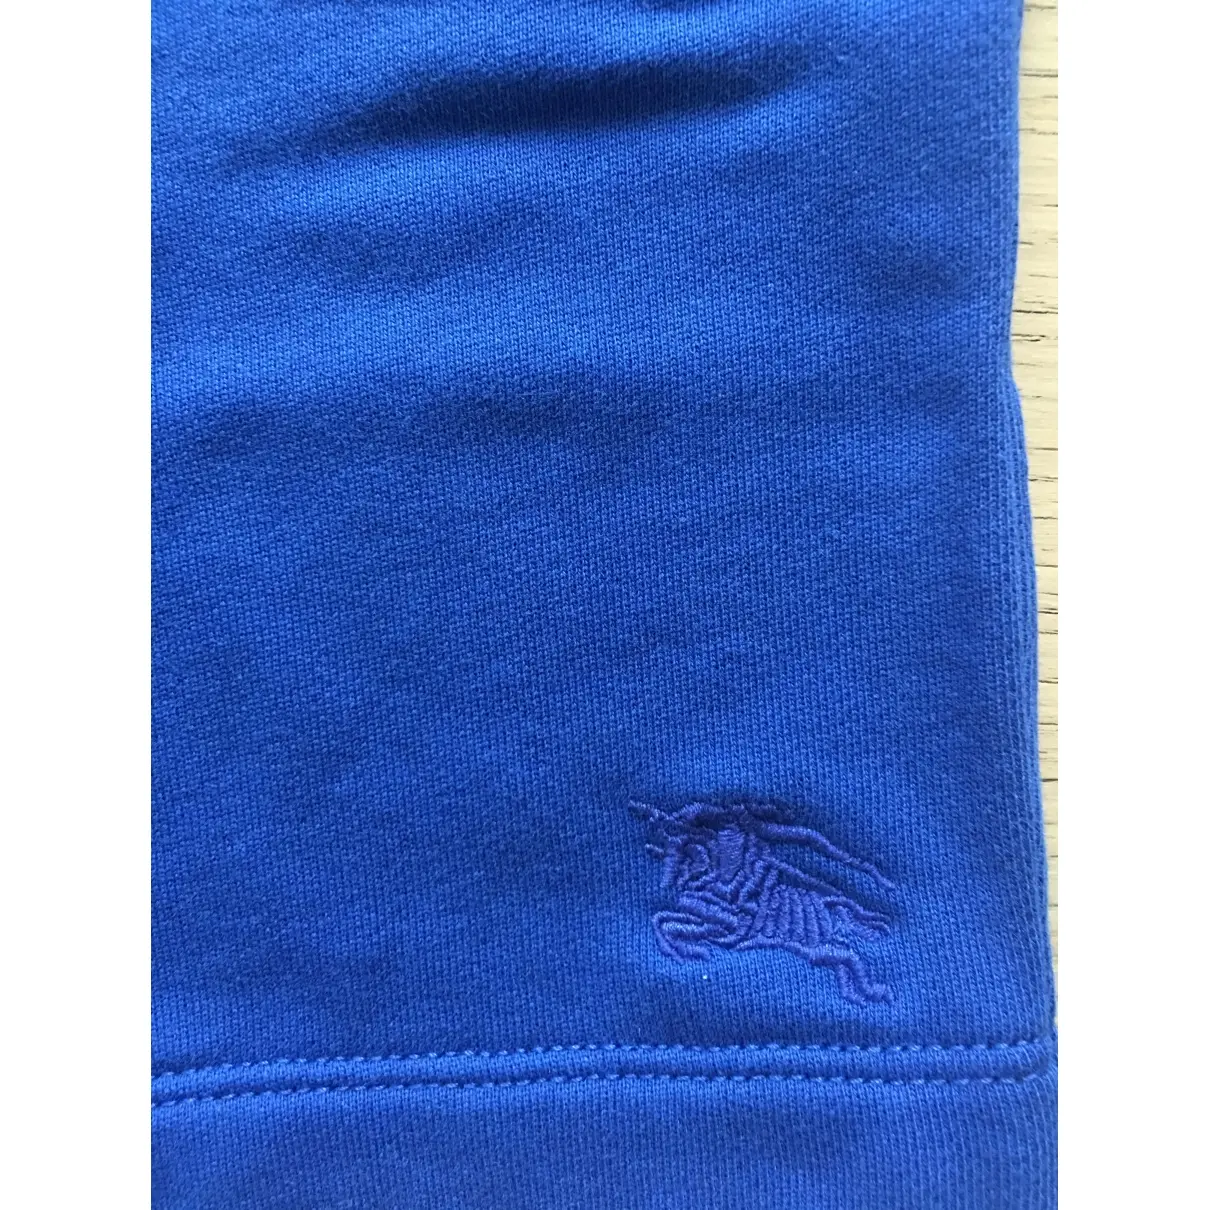 Buy Burberry Blue Cotton Shorts online